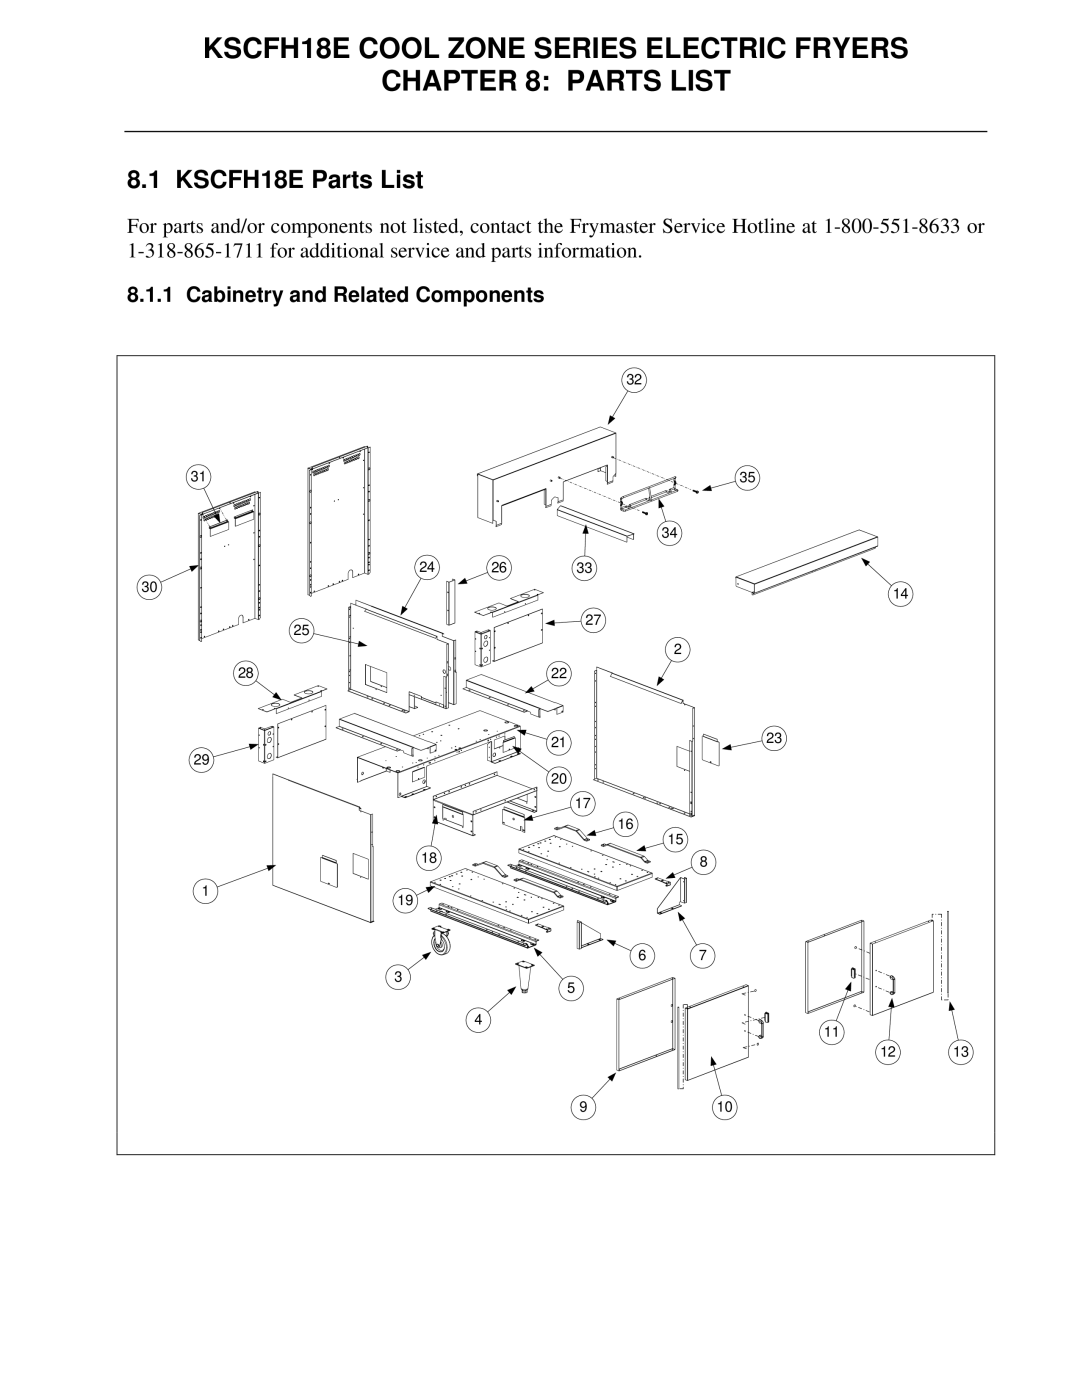 Frymaster operation manual KSCFH18E Cool Zone Series Electric Fryers Parts List, KSCFH18E Parts List 